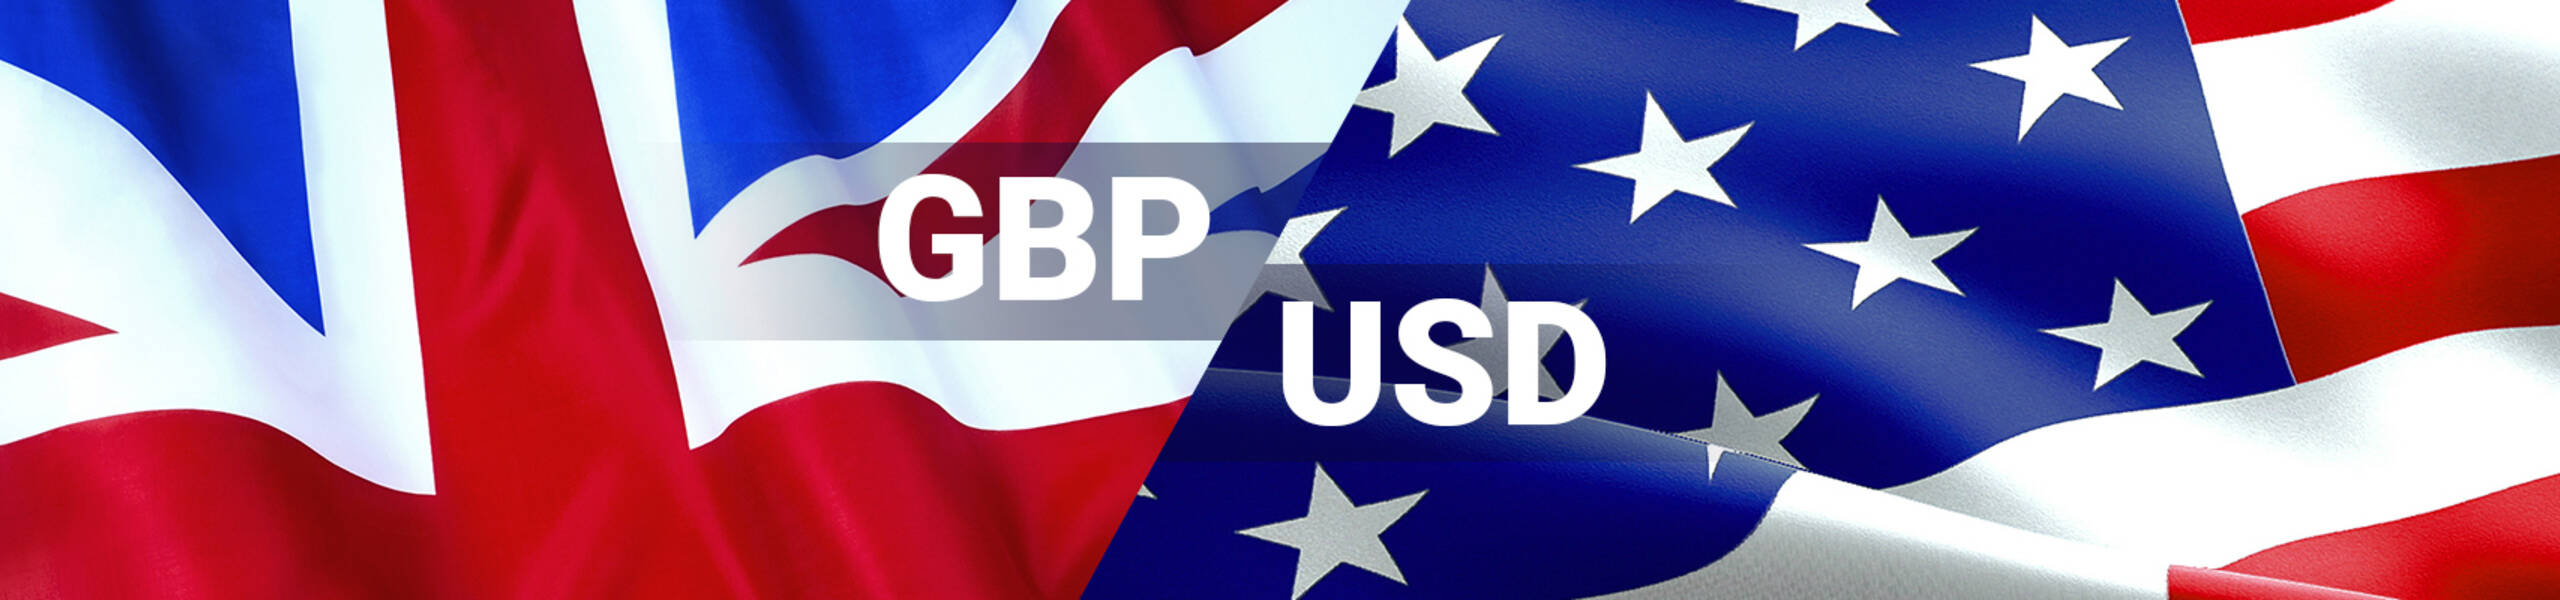 GBP/USD Previsión Semanal Oct 29 - Nov 2.